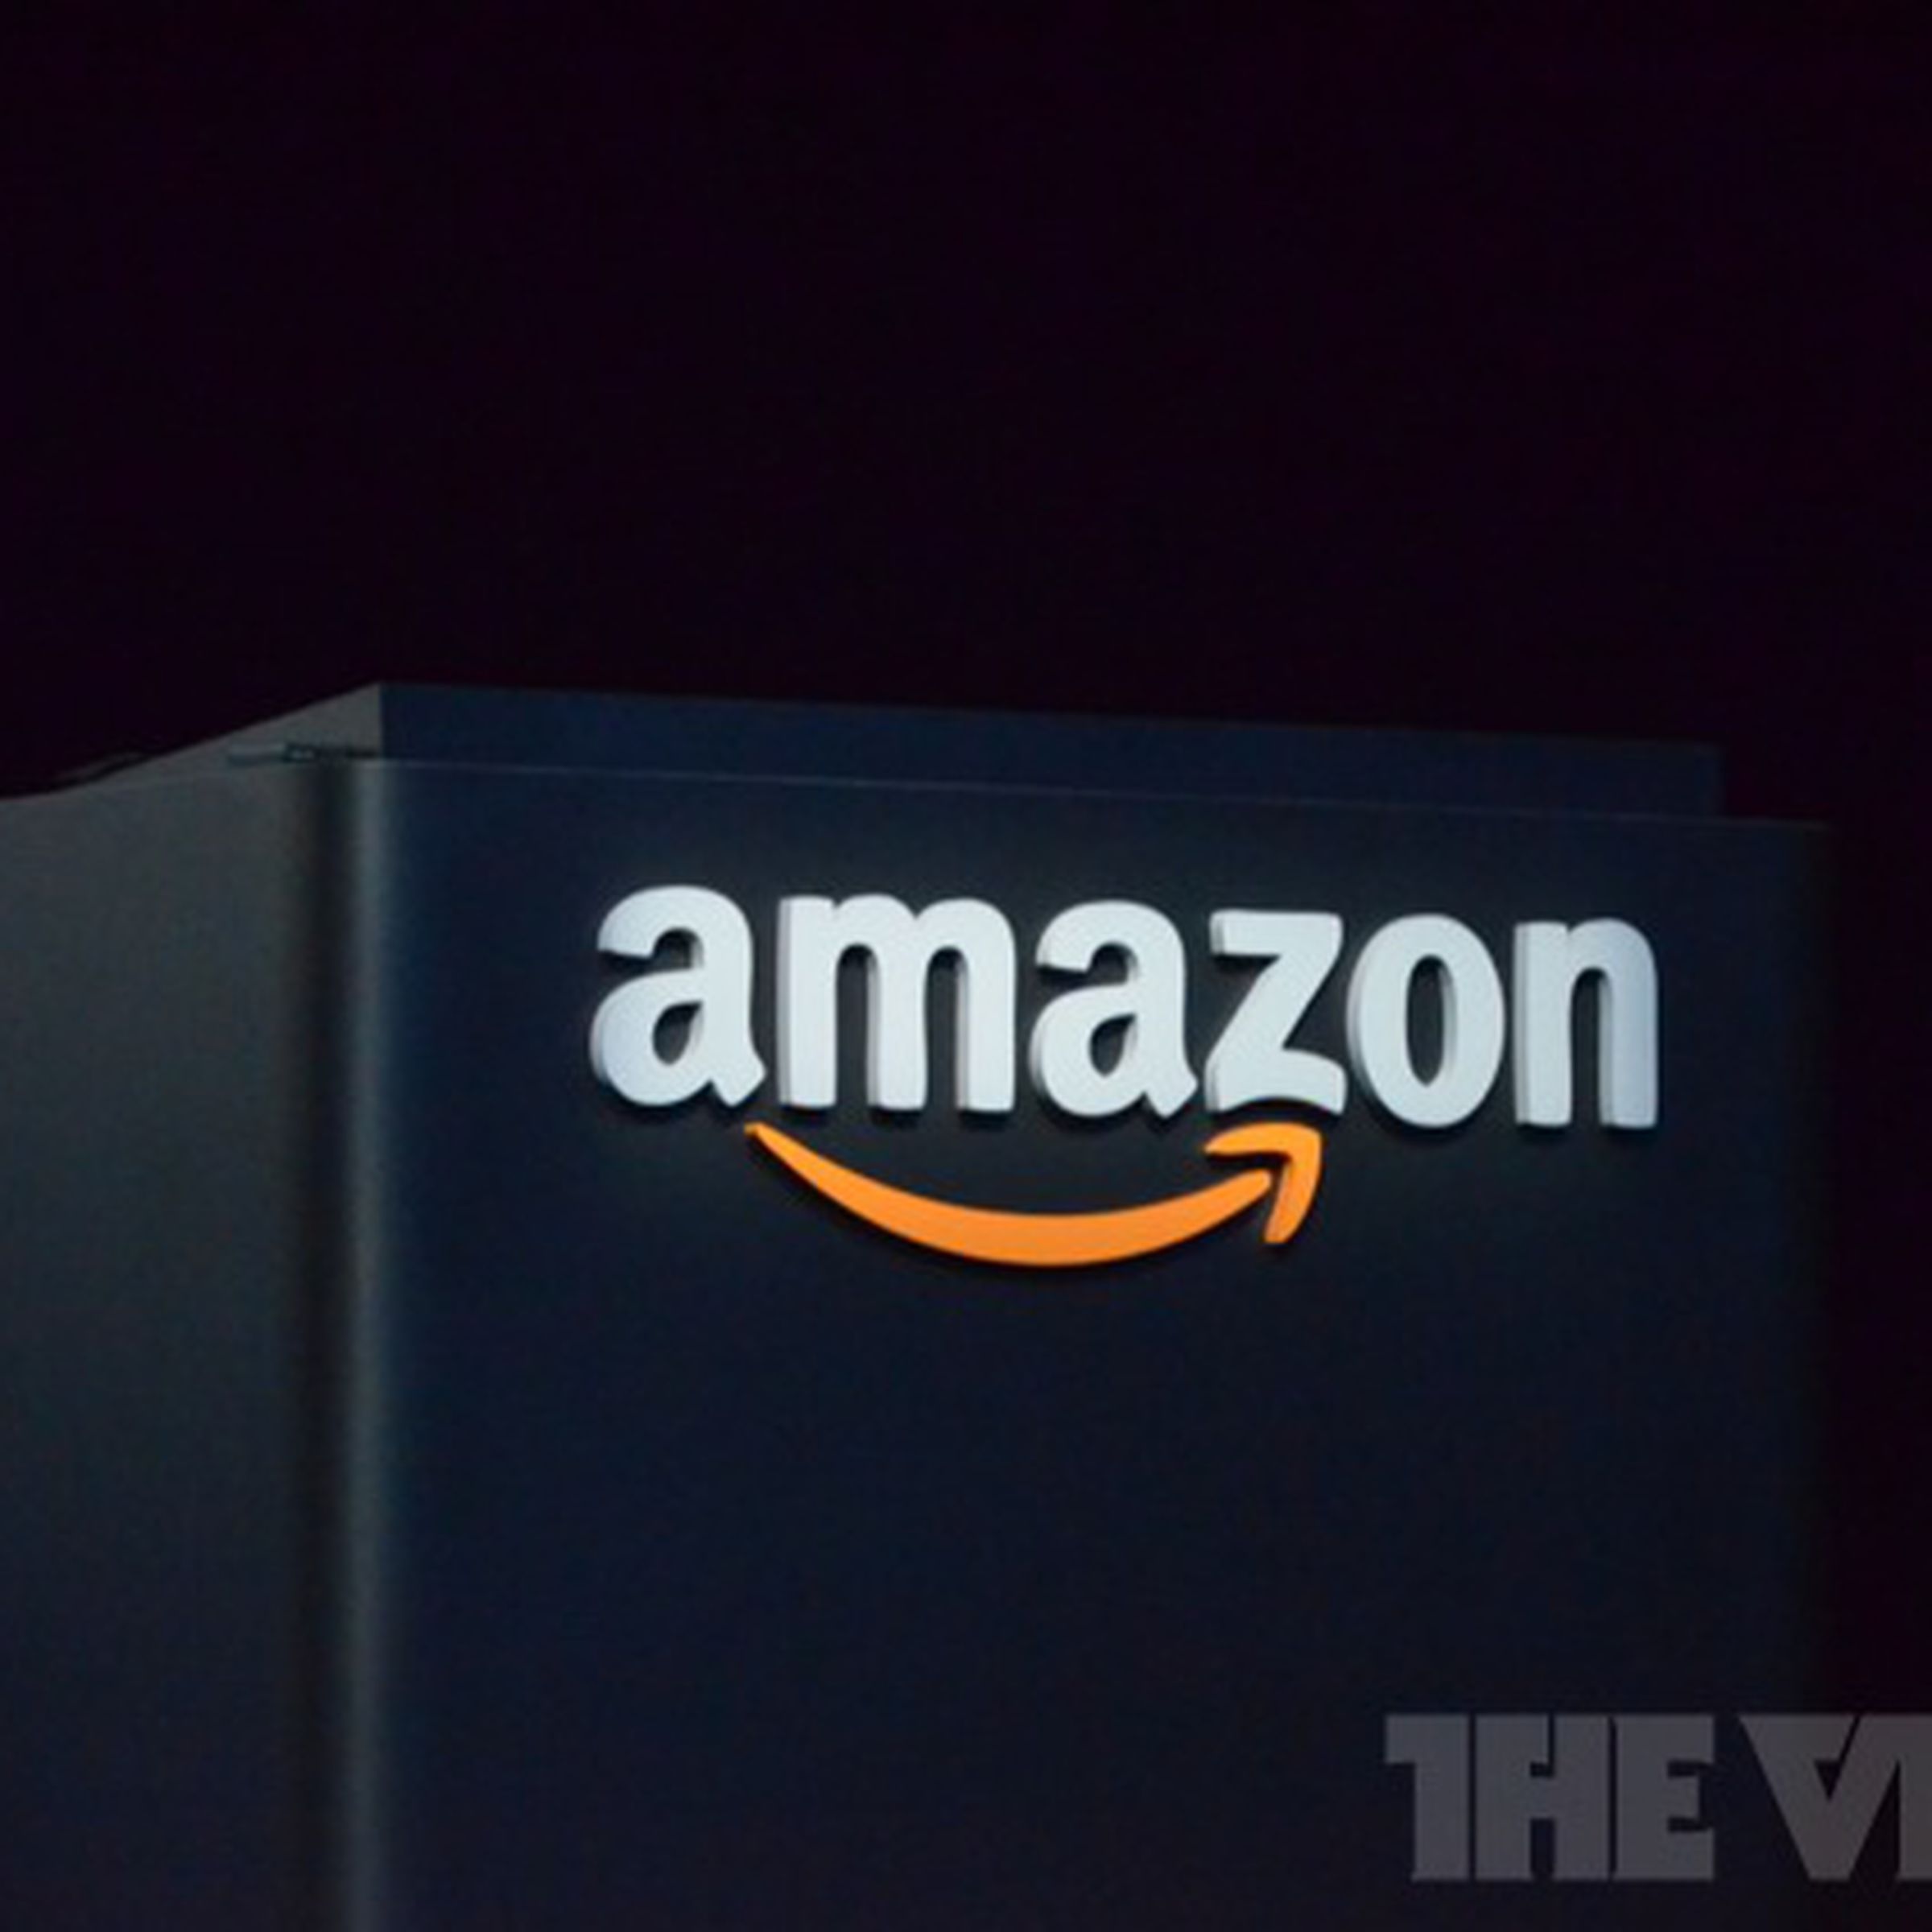 A stock photo of the Amazon logo